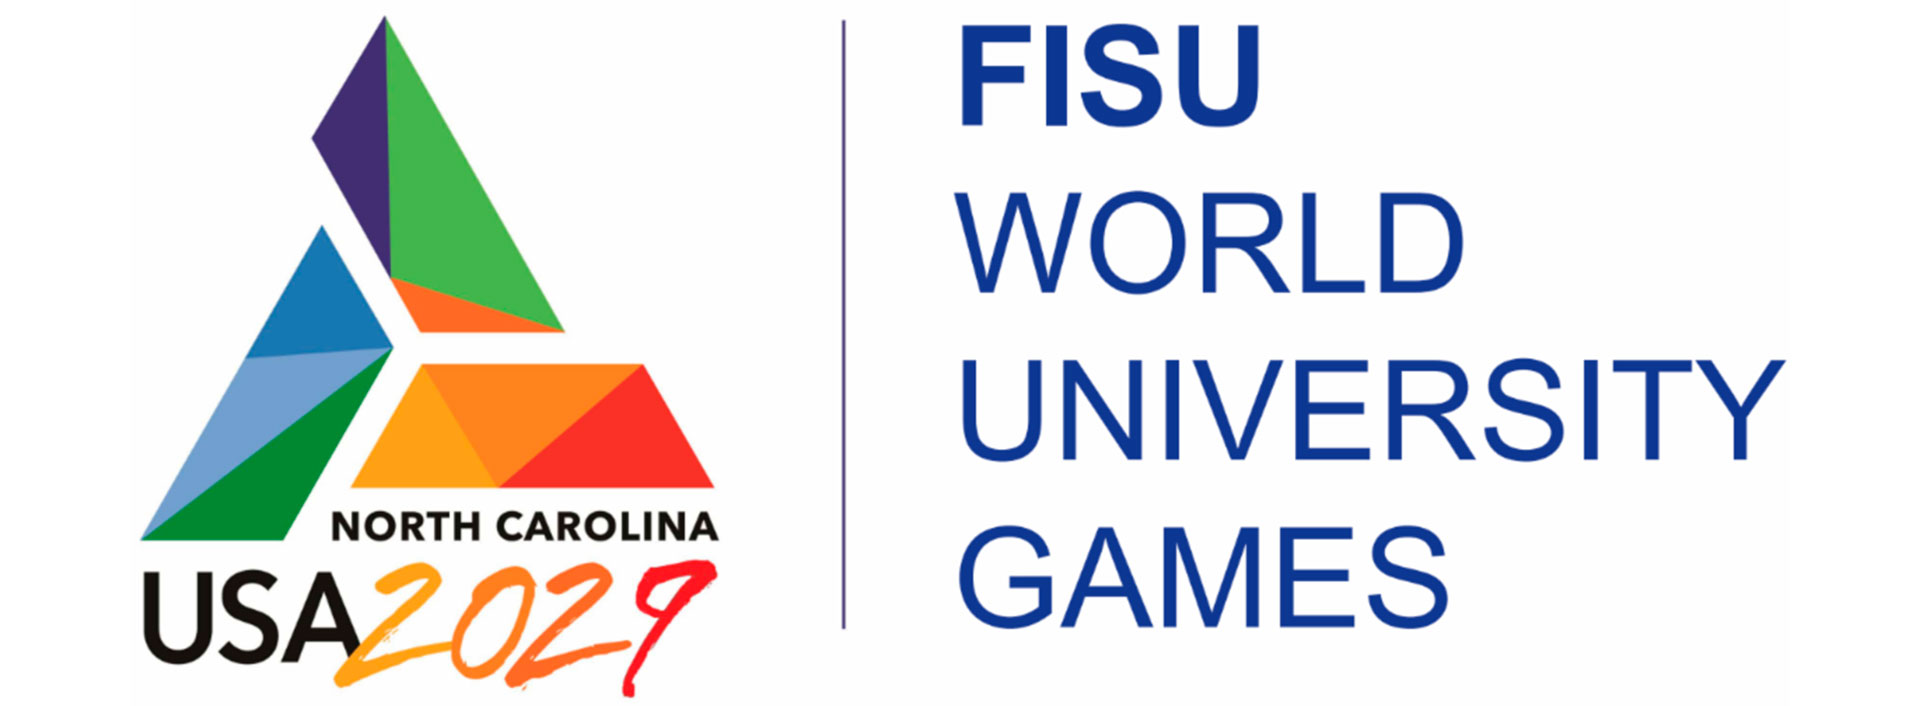 Nothing could be finer! North Carolina will host 2029 FISU World University Games